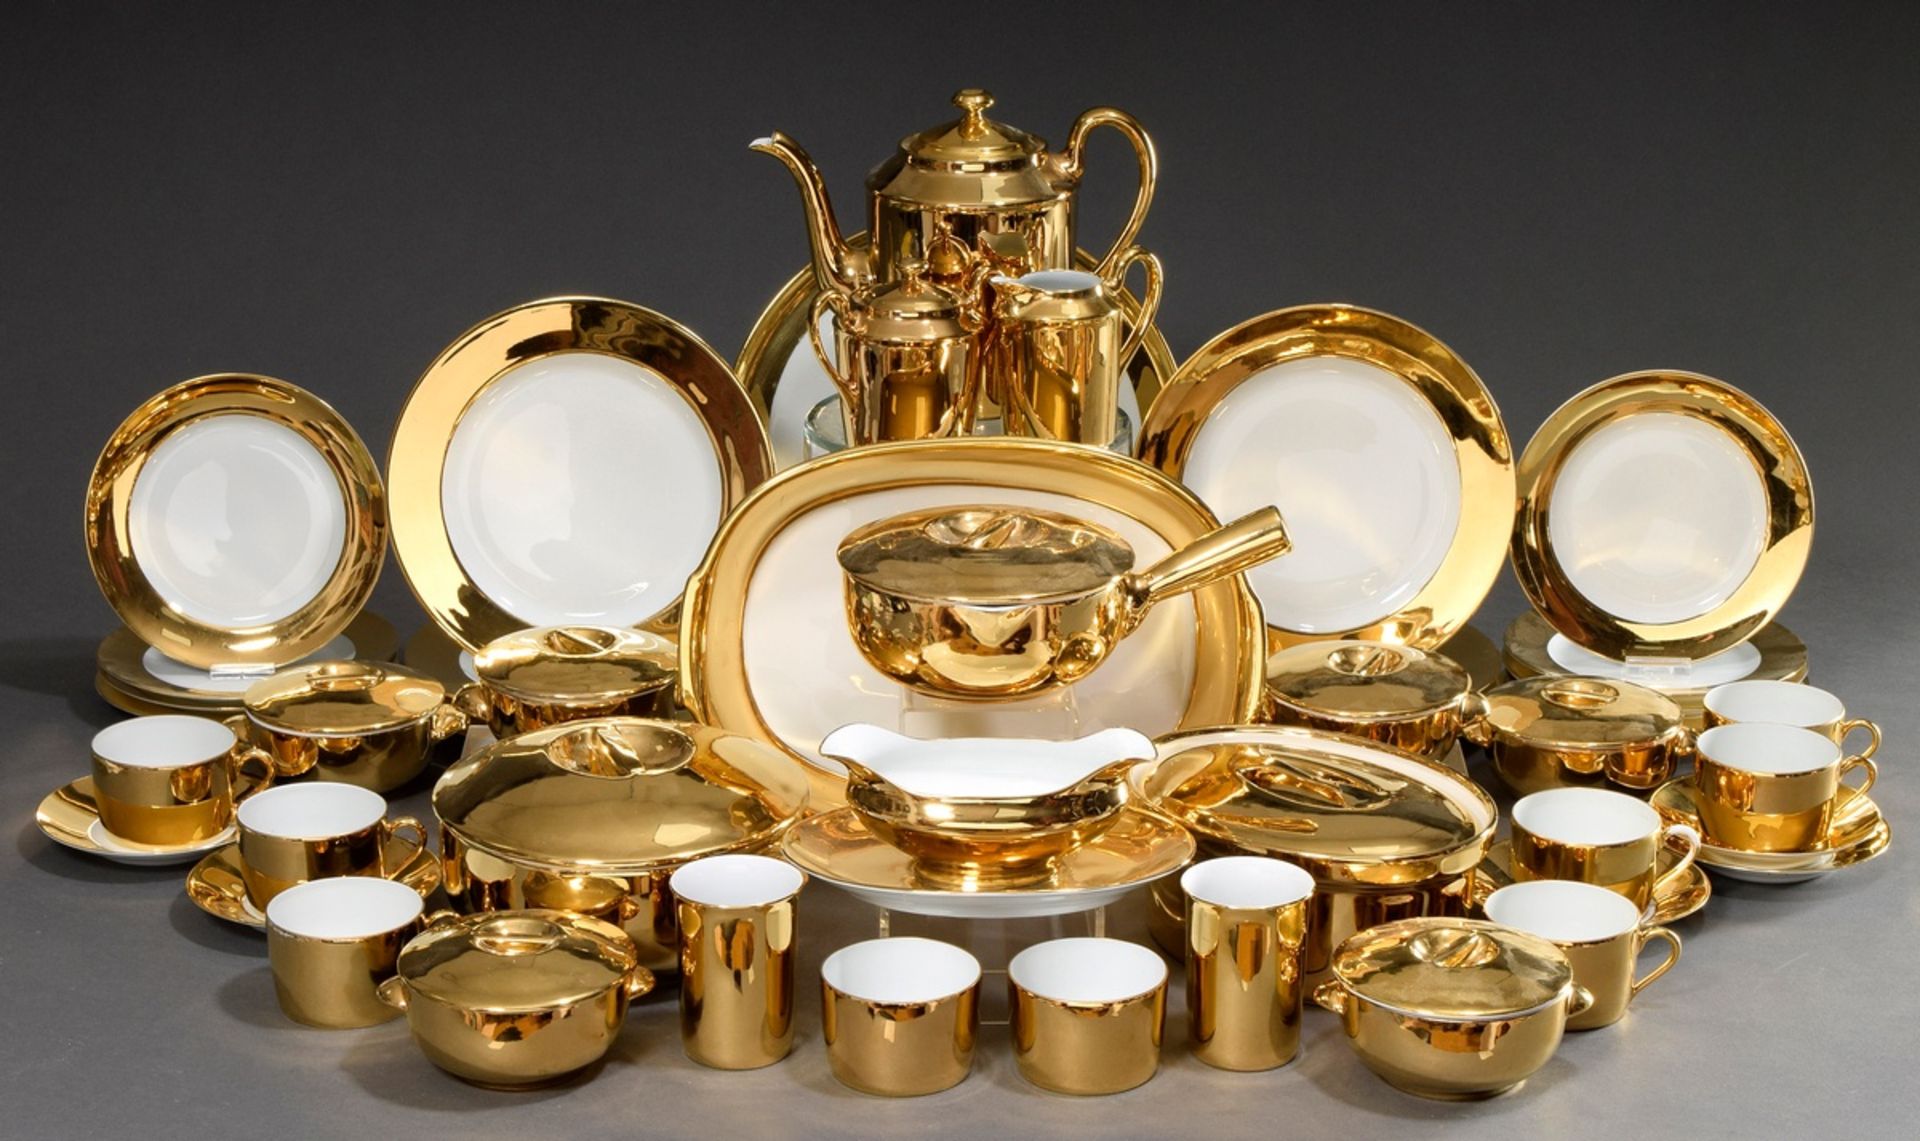 43 pieces Limoges dinner and breakfast service "Gold", Porcelaine de Paris, consisting of: 8 dinner